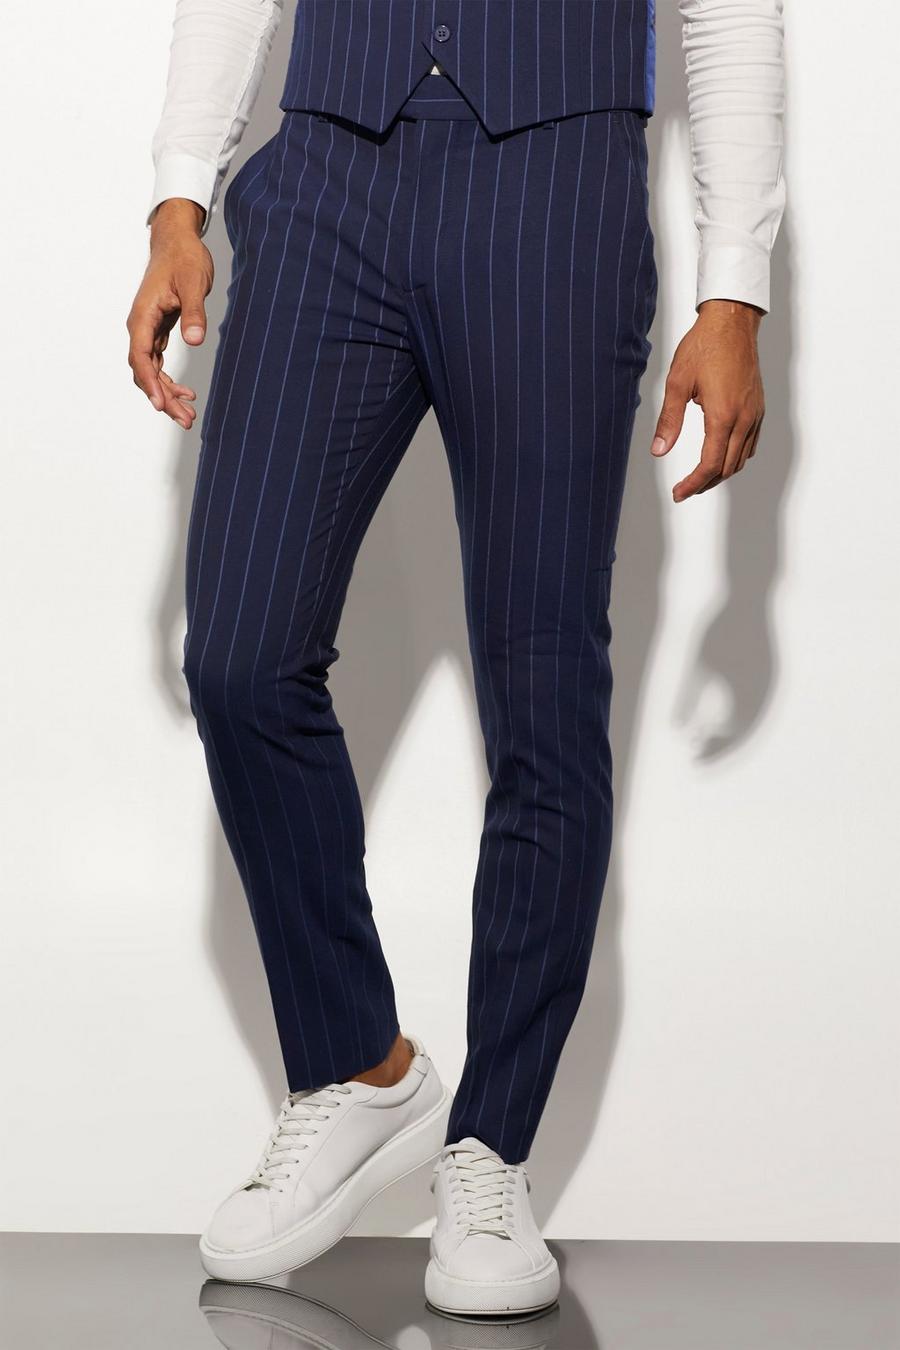 Pantaloni completo Skinny Fit blu navy a righe verticali, Blu oltremare image number 1